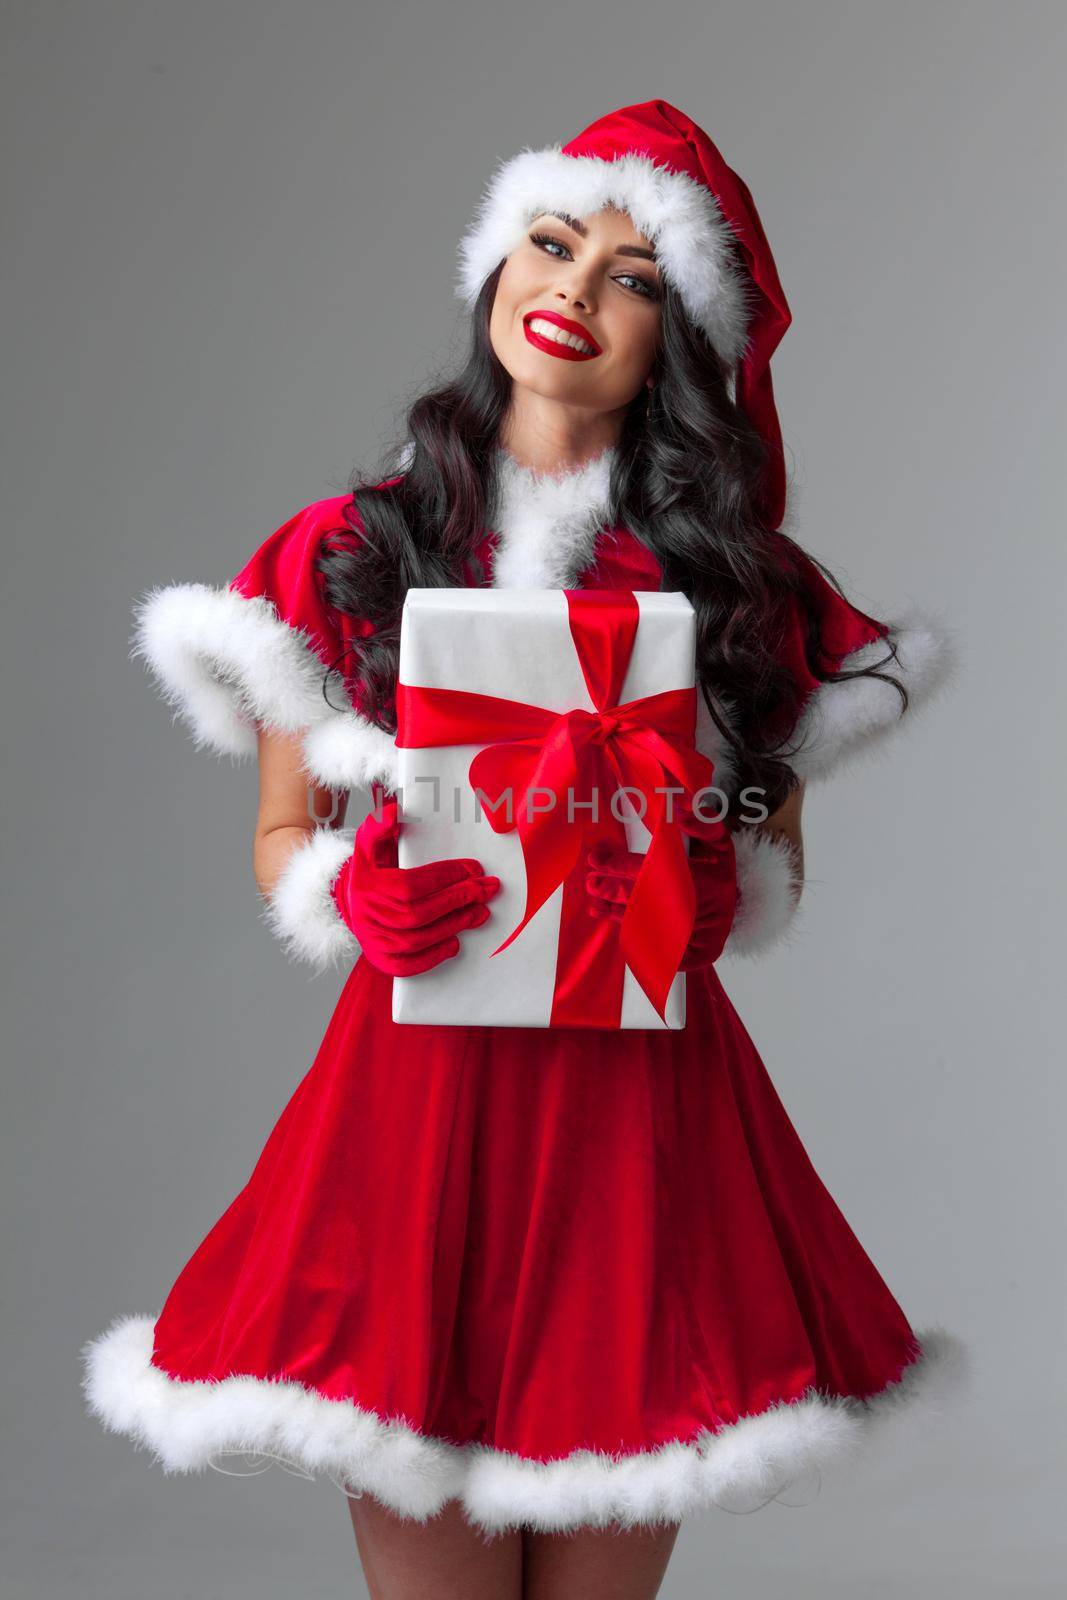 Beautiful young woman in Santa dress celebrating Christmas holding gift box